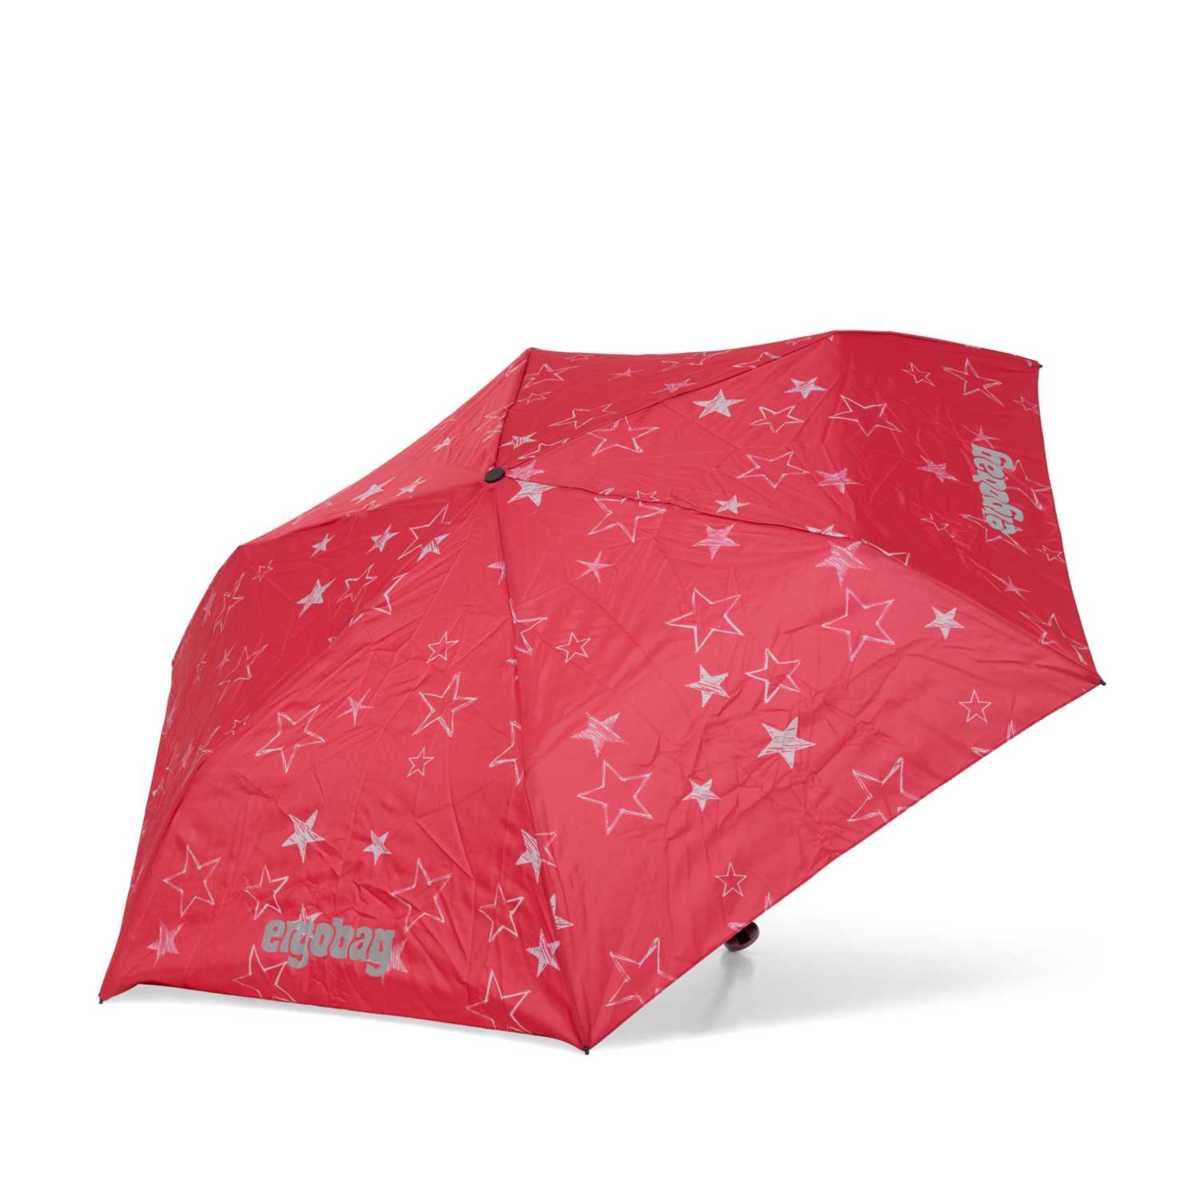 Ergobag Regenschirm Cinbärella offen